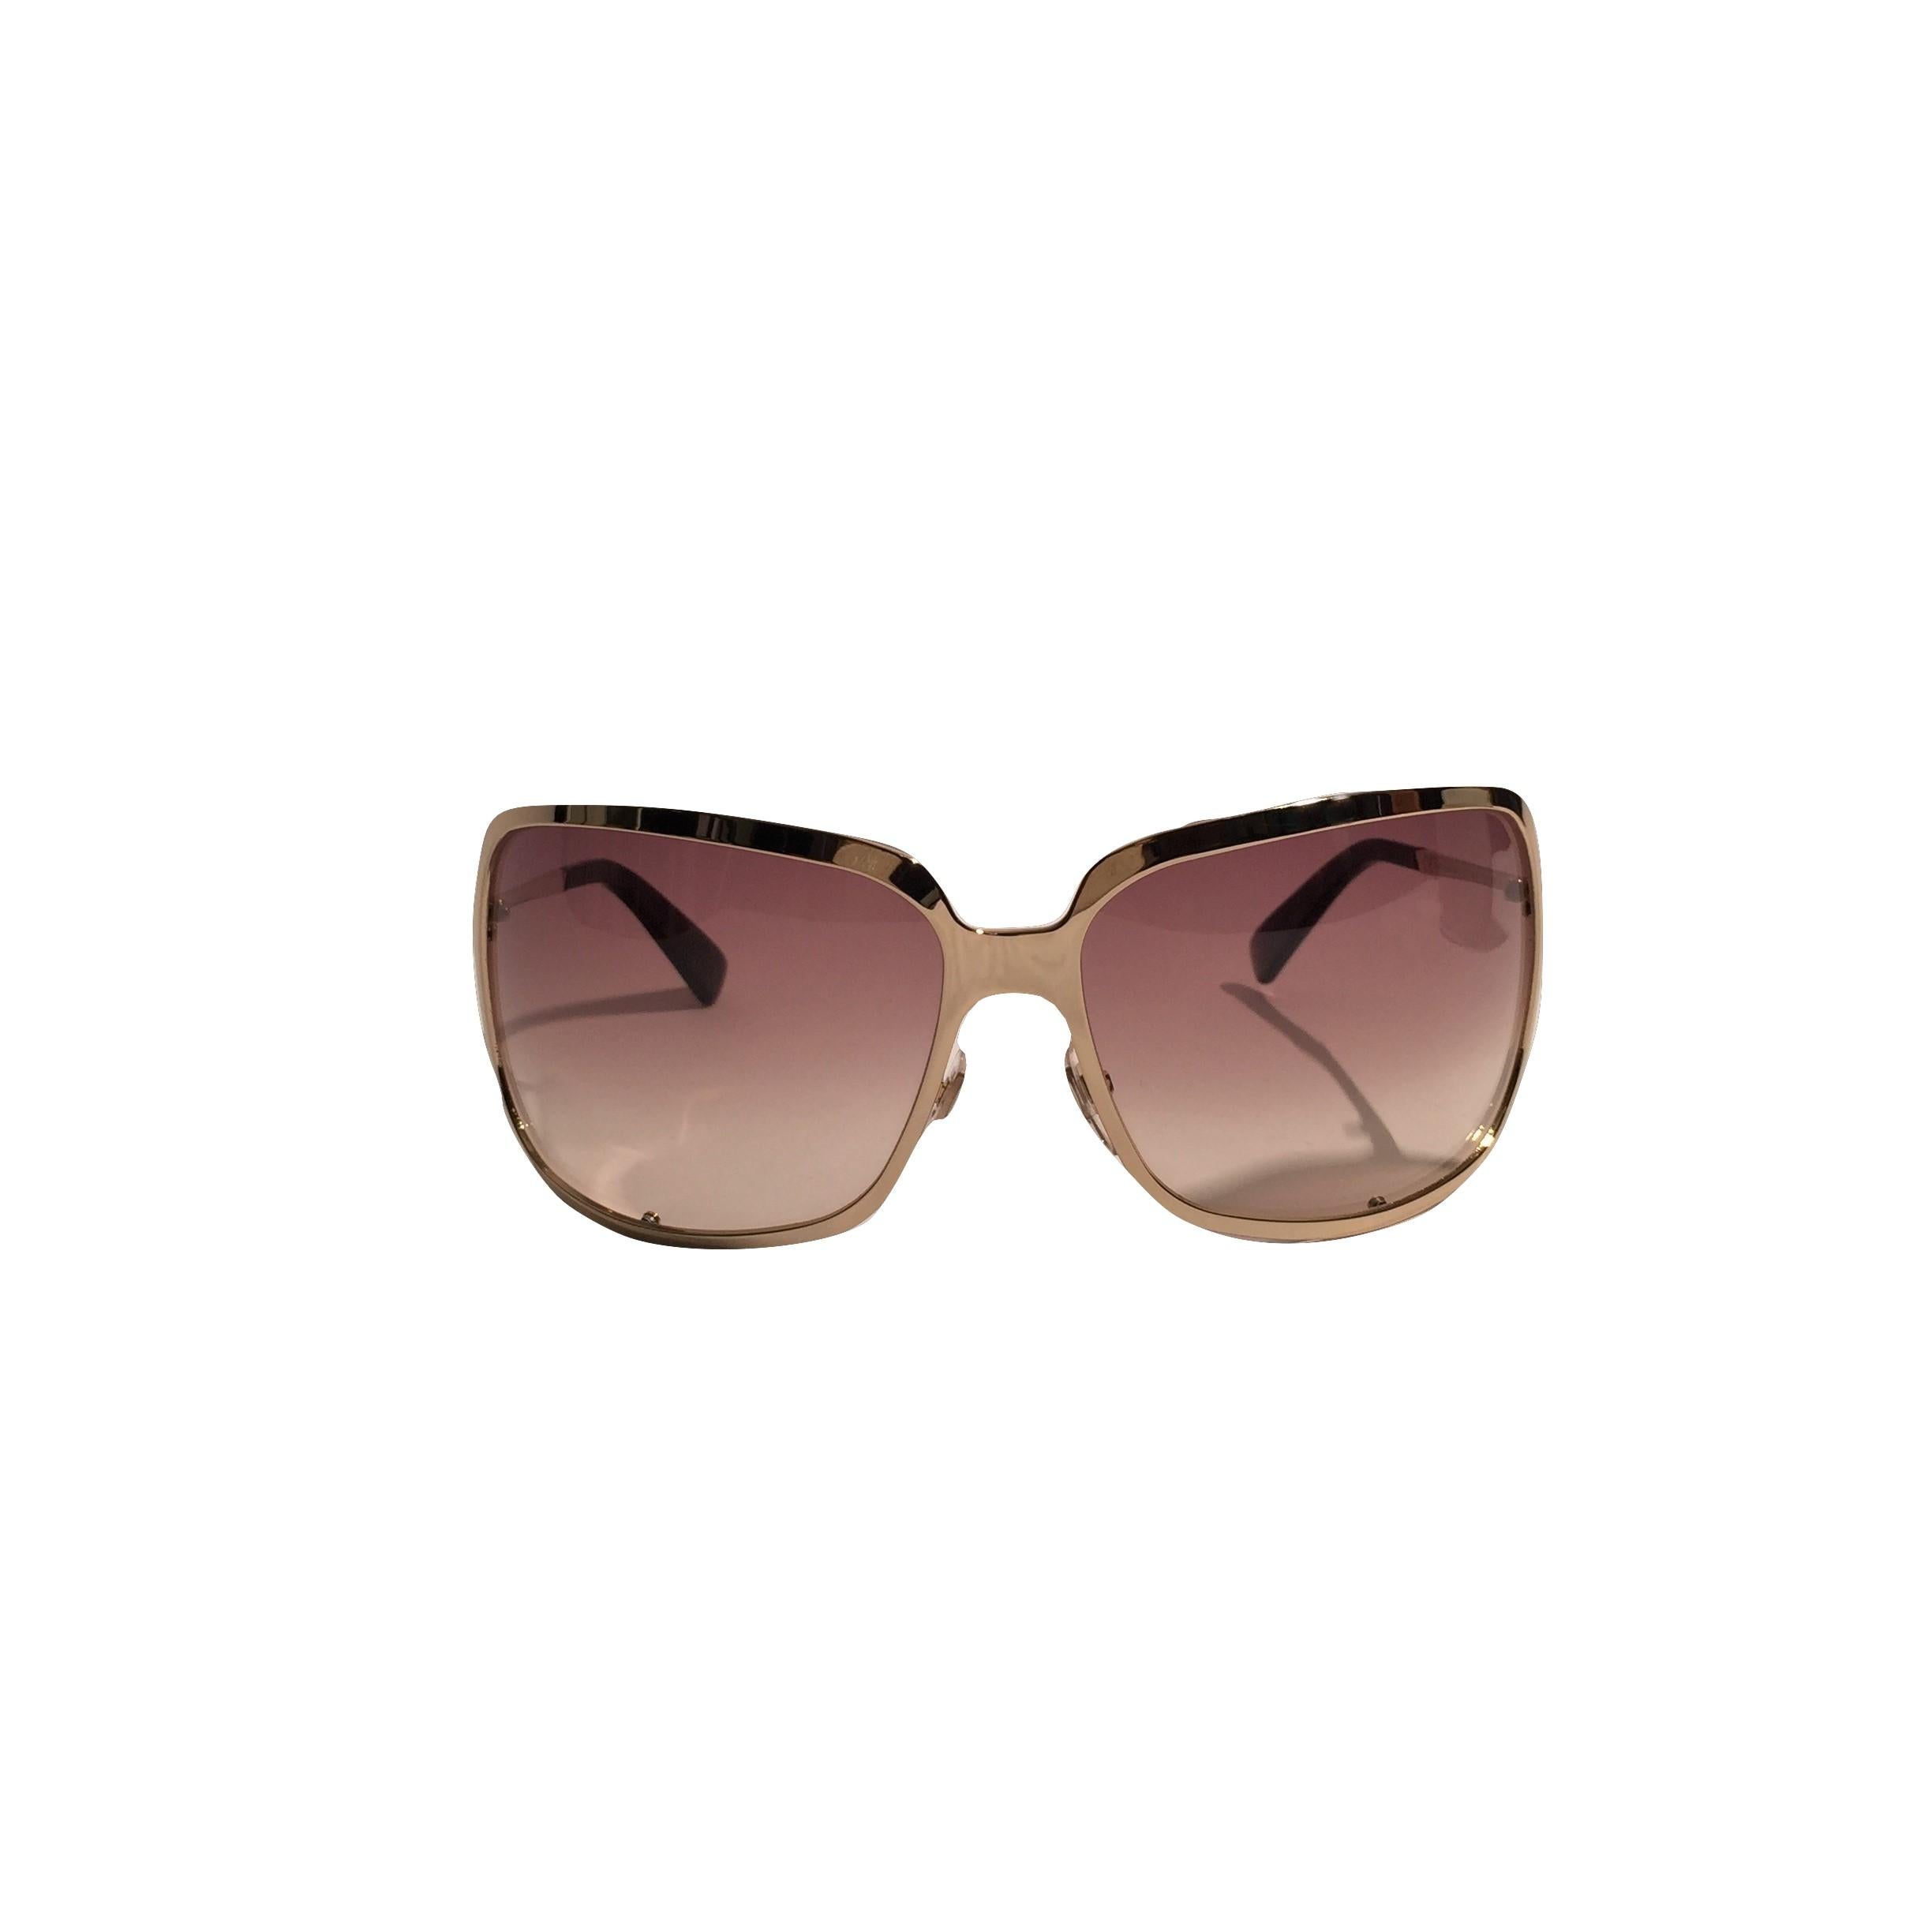 New Yves Saint Laurent YSL Gold Wrap Sunglasses W/ Case 1